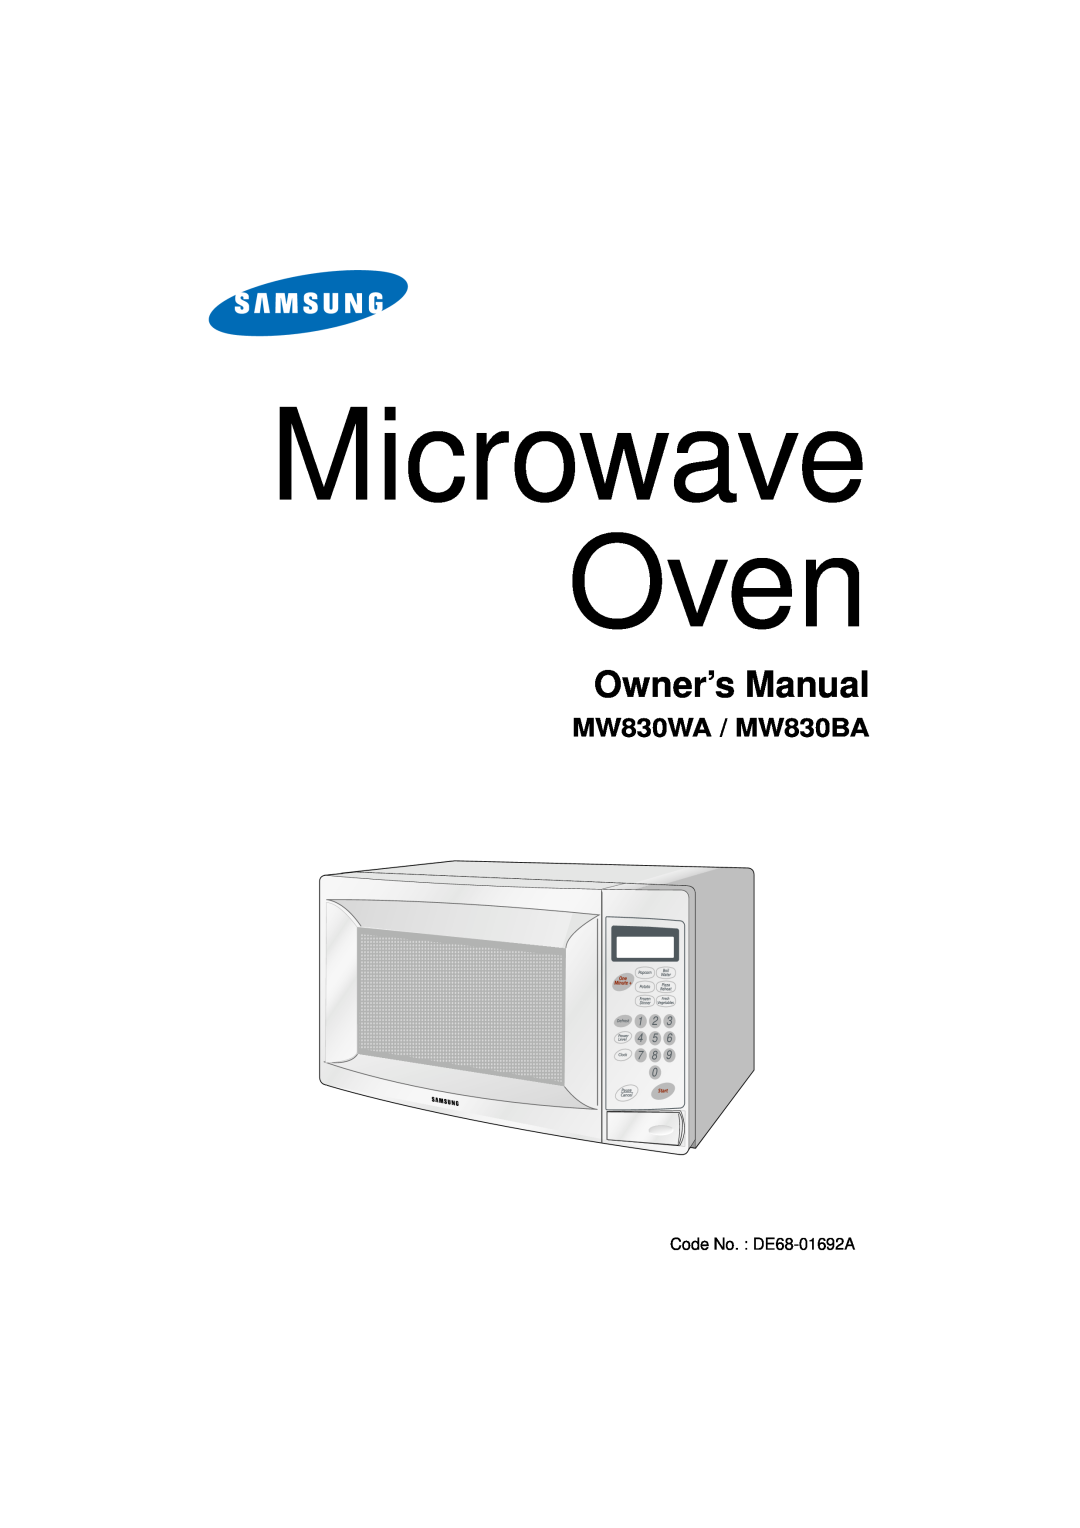 Samsung owner manual MW830WA / MW830BA, Microwave Oven, 1 2 